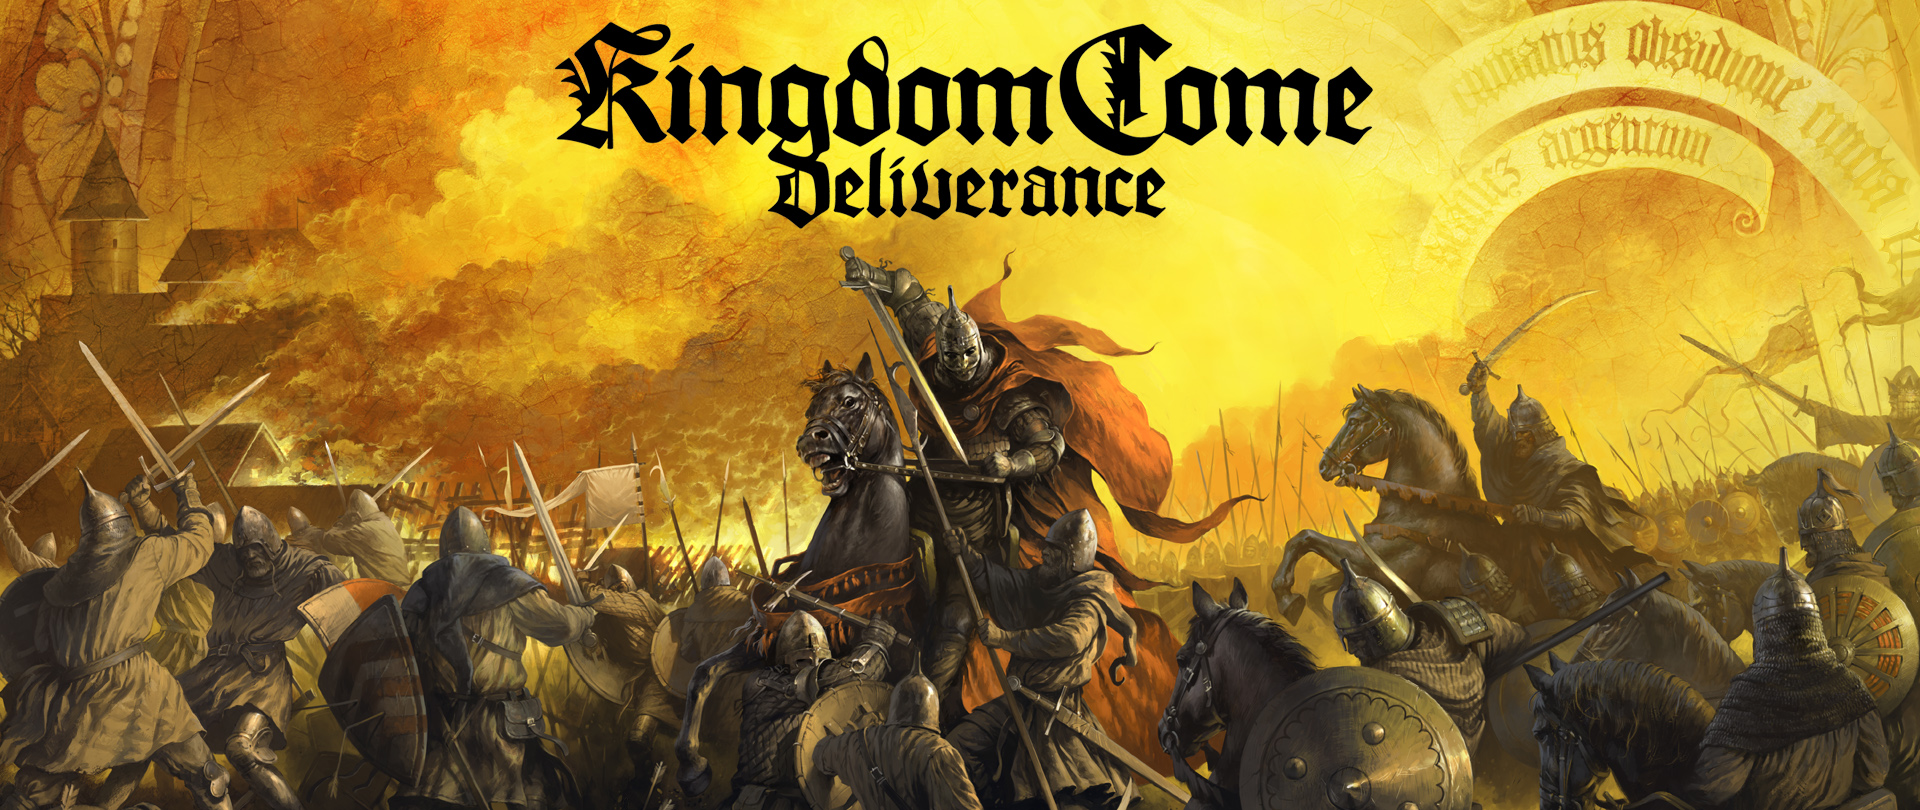 24no_kingdom-come-deliverance-preview-01-header.jpg